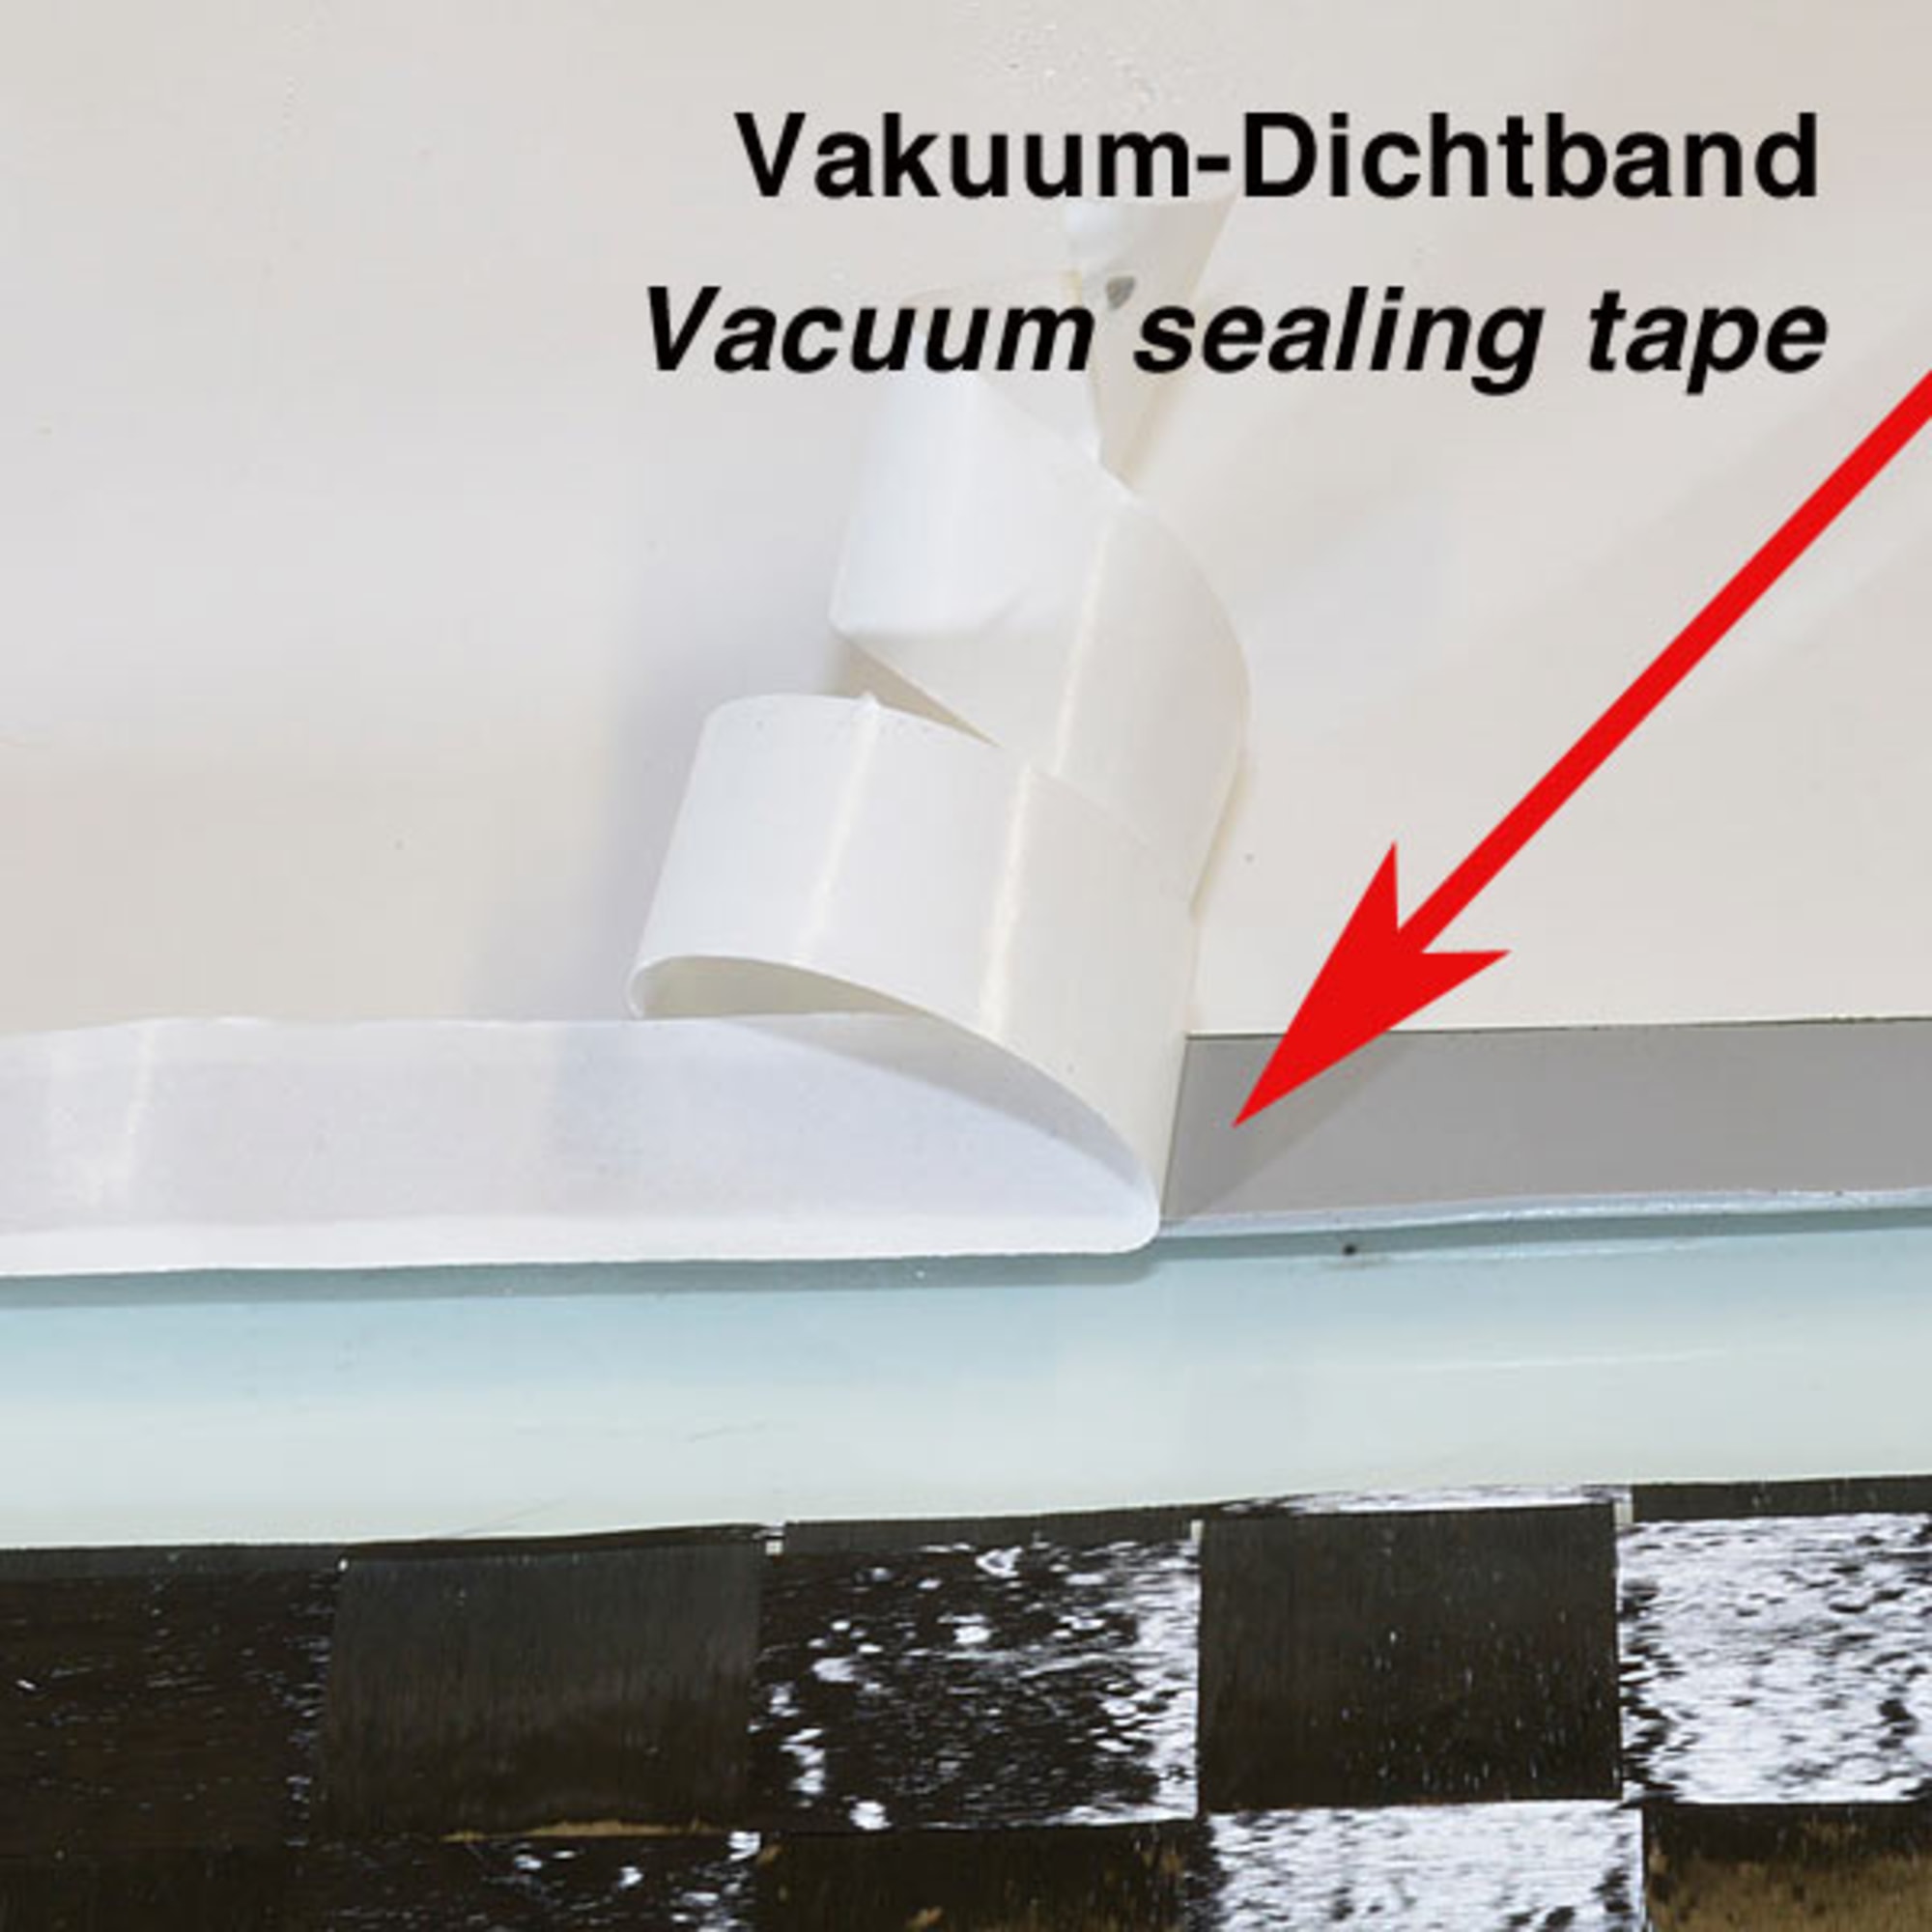 Vakuum-Dichtband GRAU, 3 x 12 mm x 15 m (bis 90 °C), Bild 2